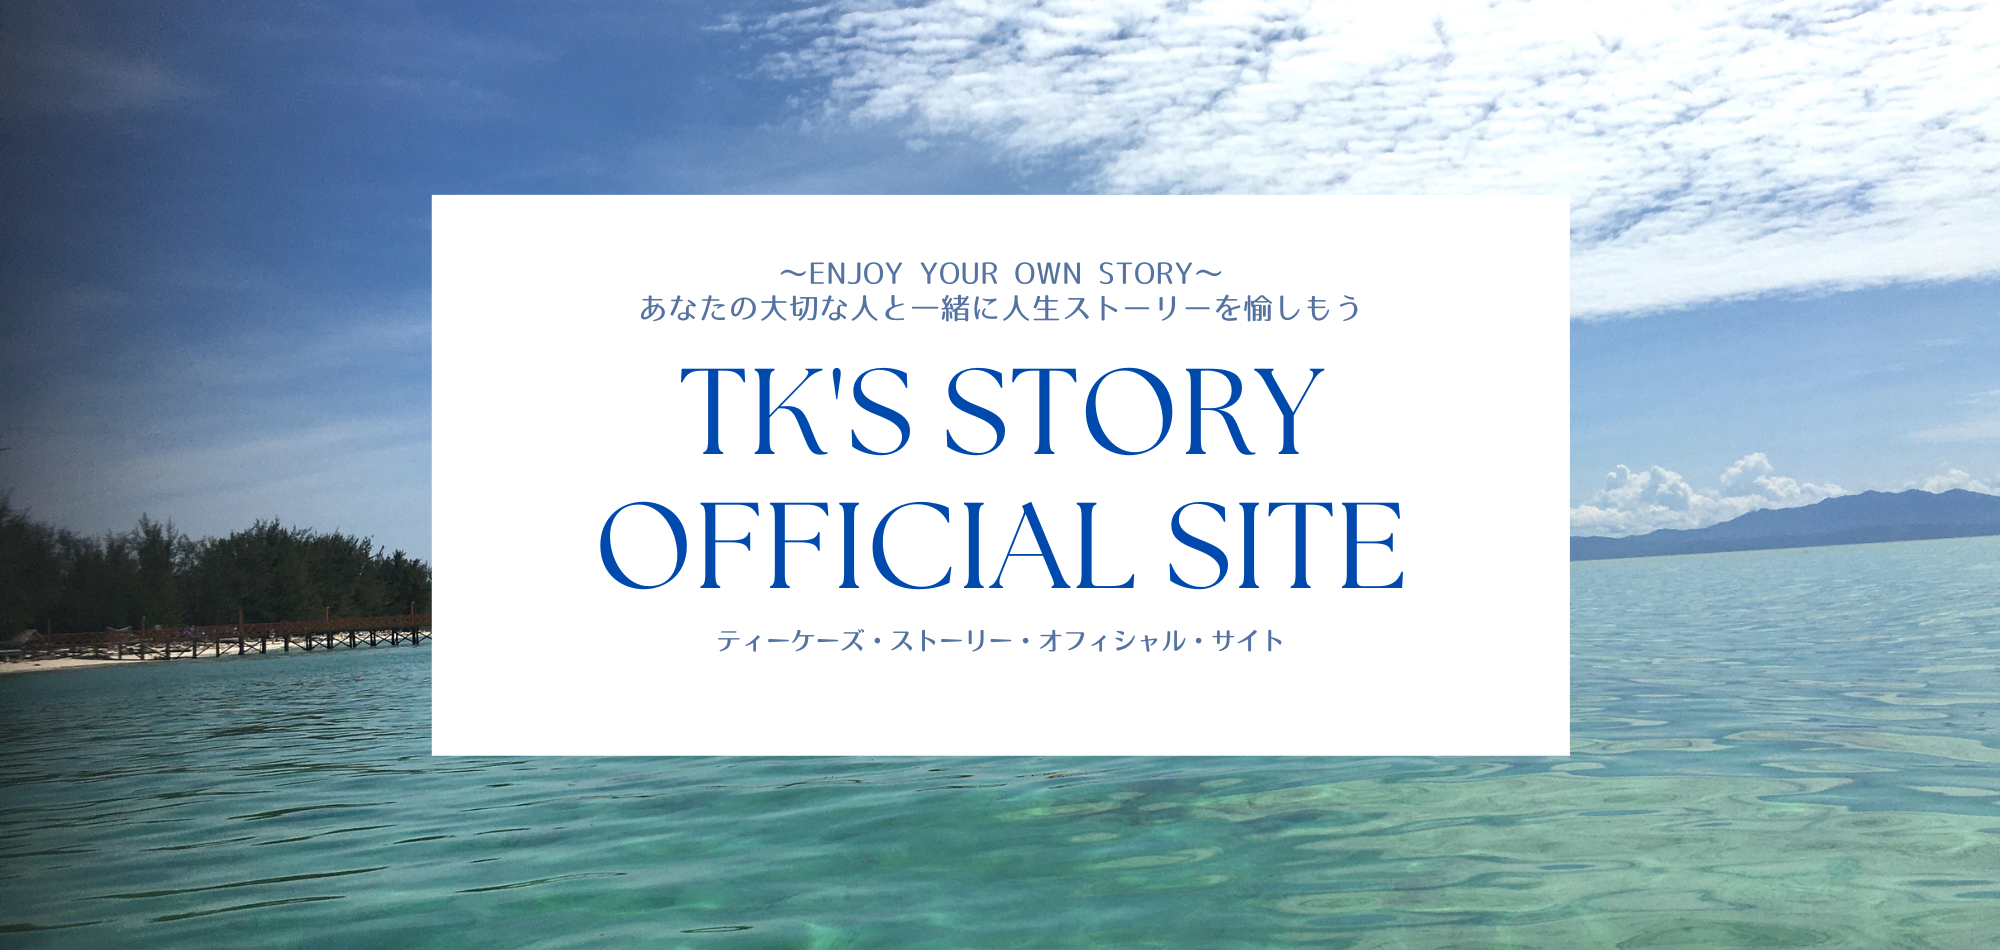 TK 's STORY OFFICIAL SITE | ティーケーズ ストーリー オフィシャルサイト